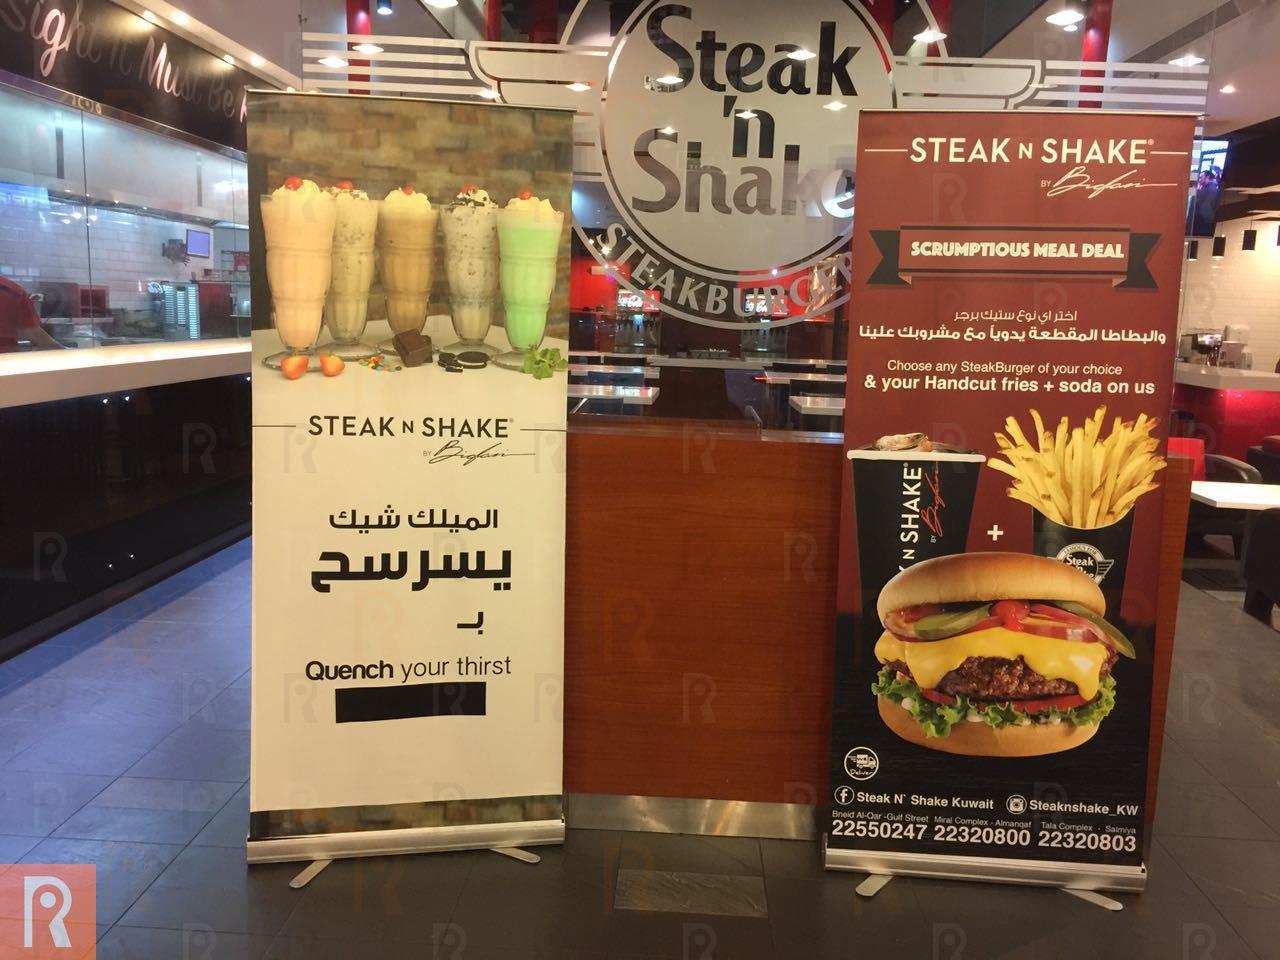 Steak n Shake Restaurant Permanently closed in Kuwait?! 